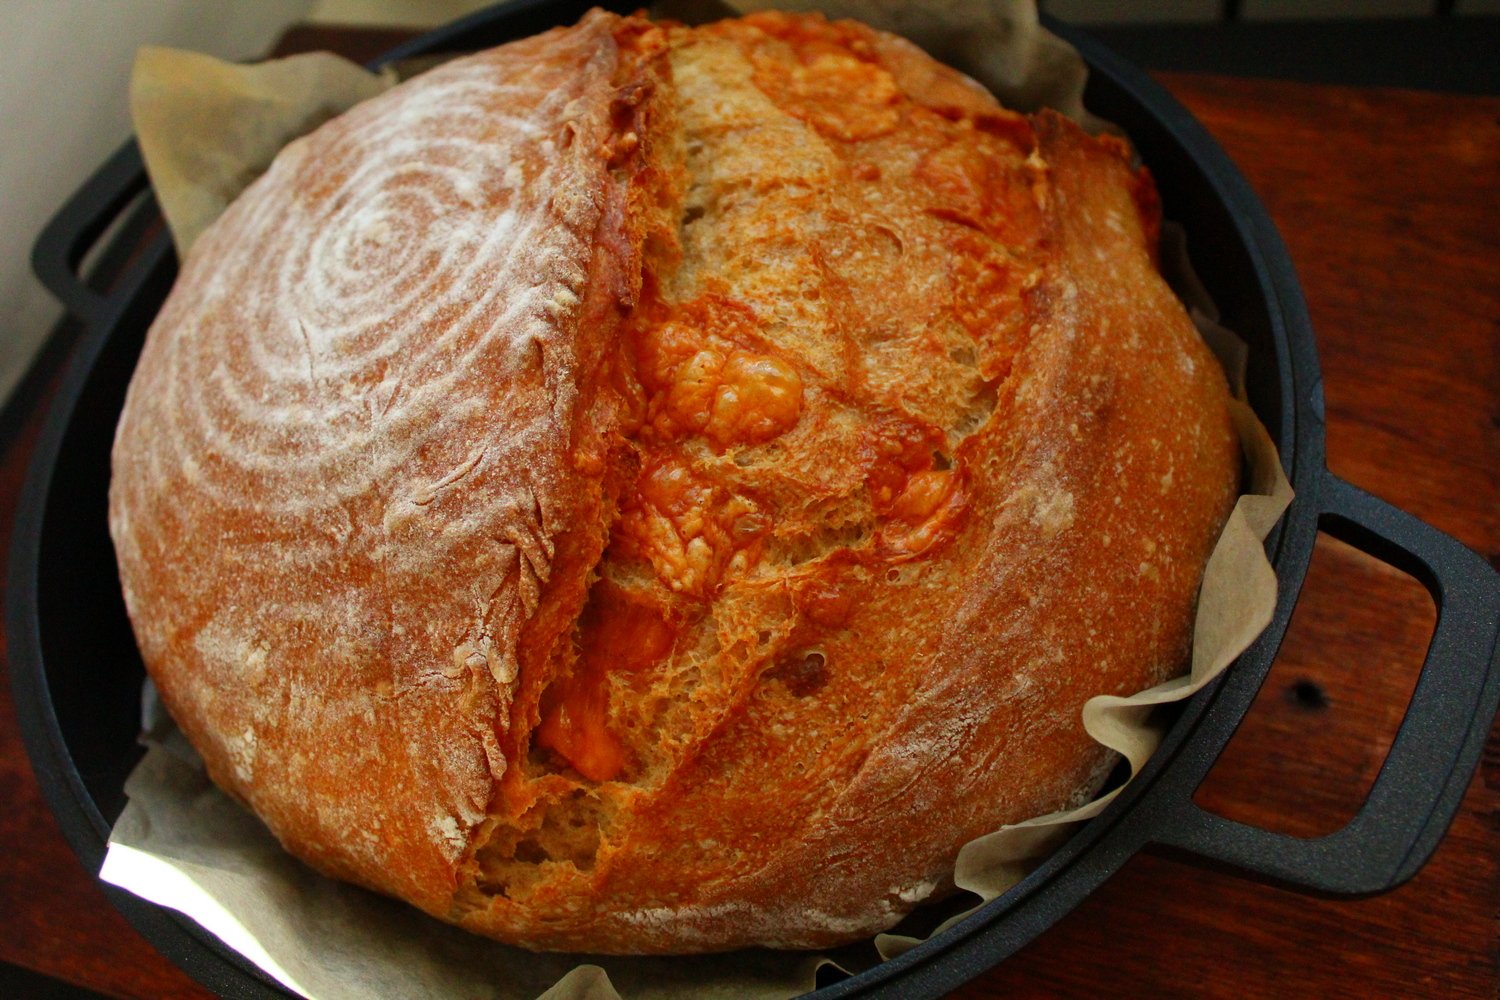 pshenichno rzhanojj khleb s syrom: poshagovyjj recept khleba na opare pulish57 Пшенично житній хліб з сиром: покроковий рецепт хліба на опарі пулиш